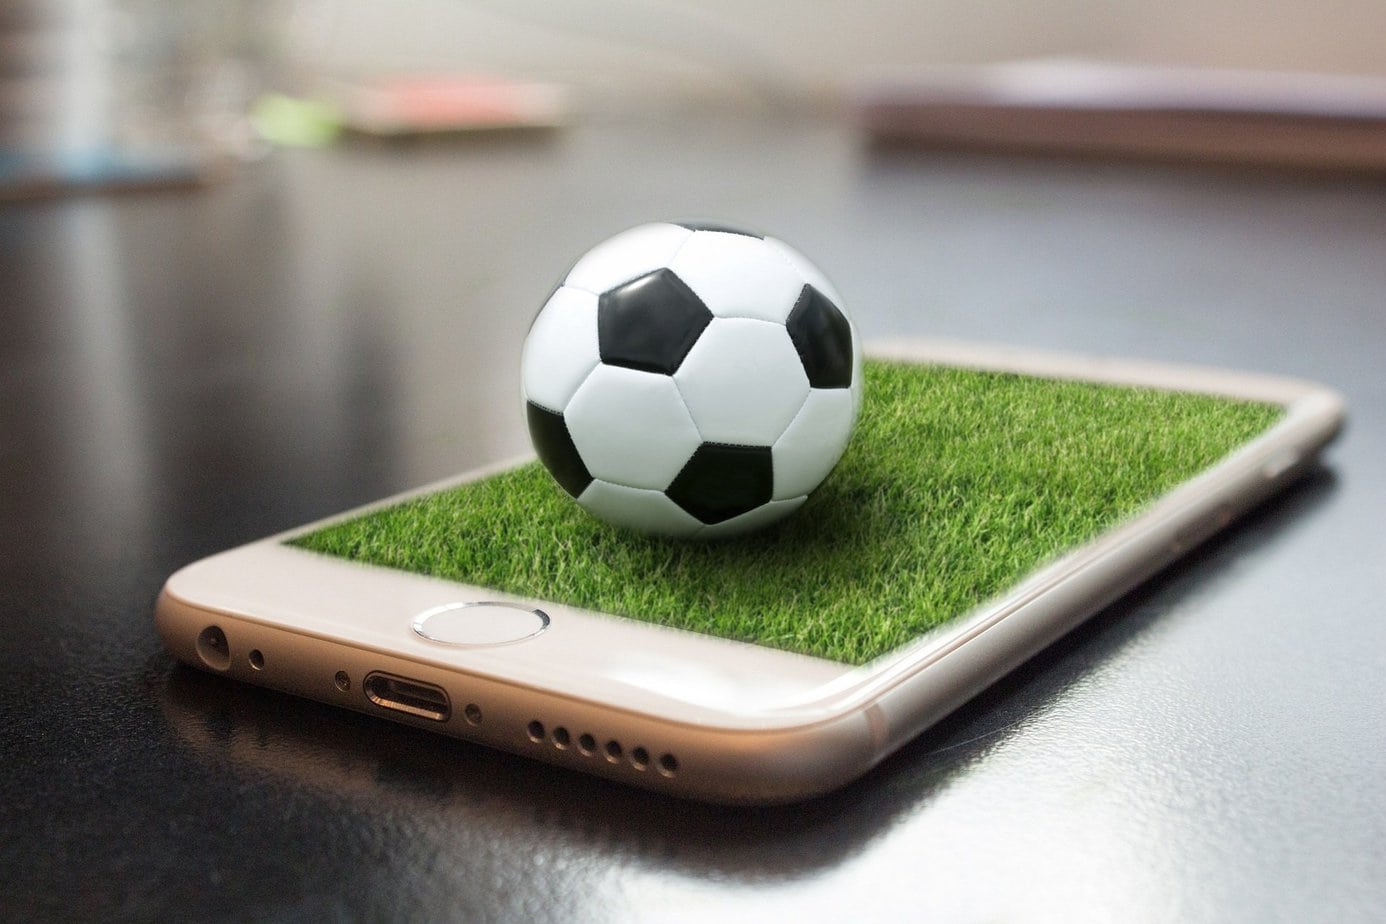 5 apps every soccer fan should know